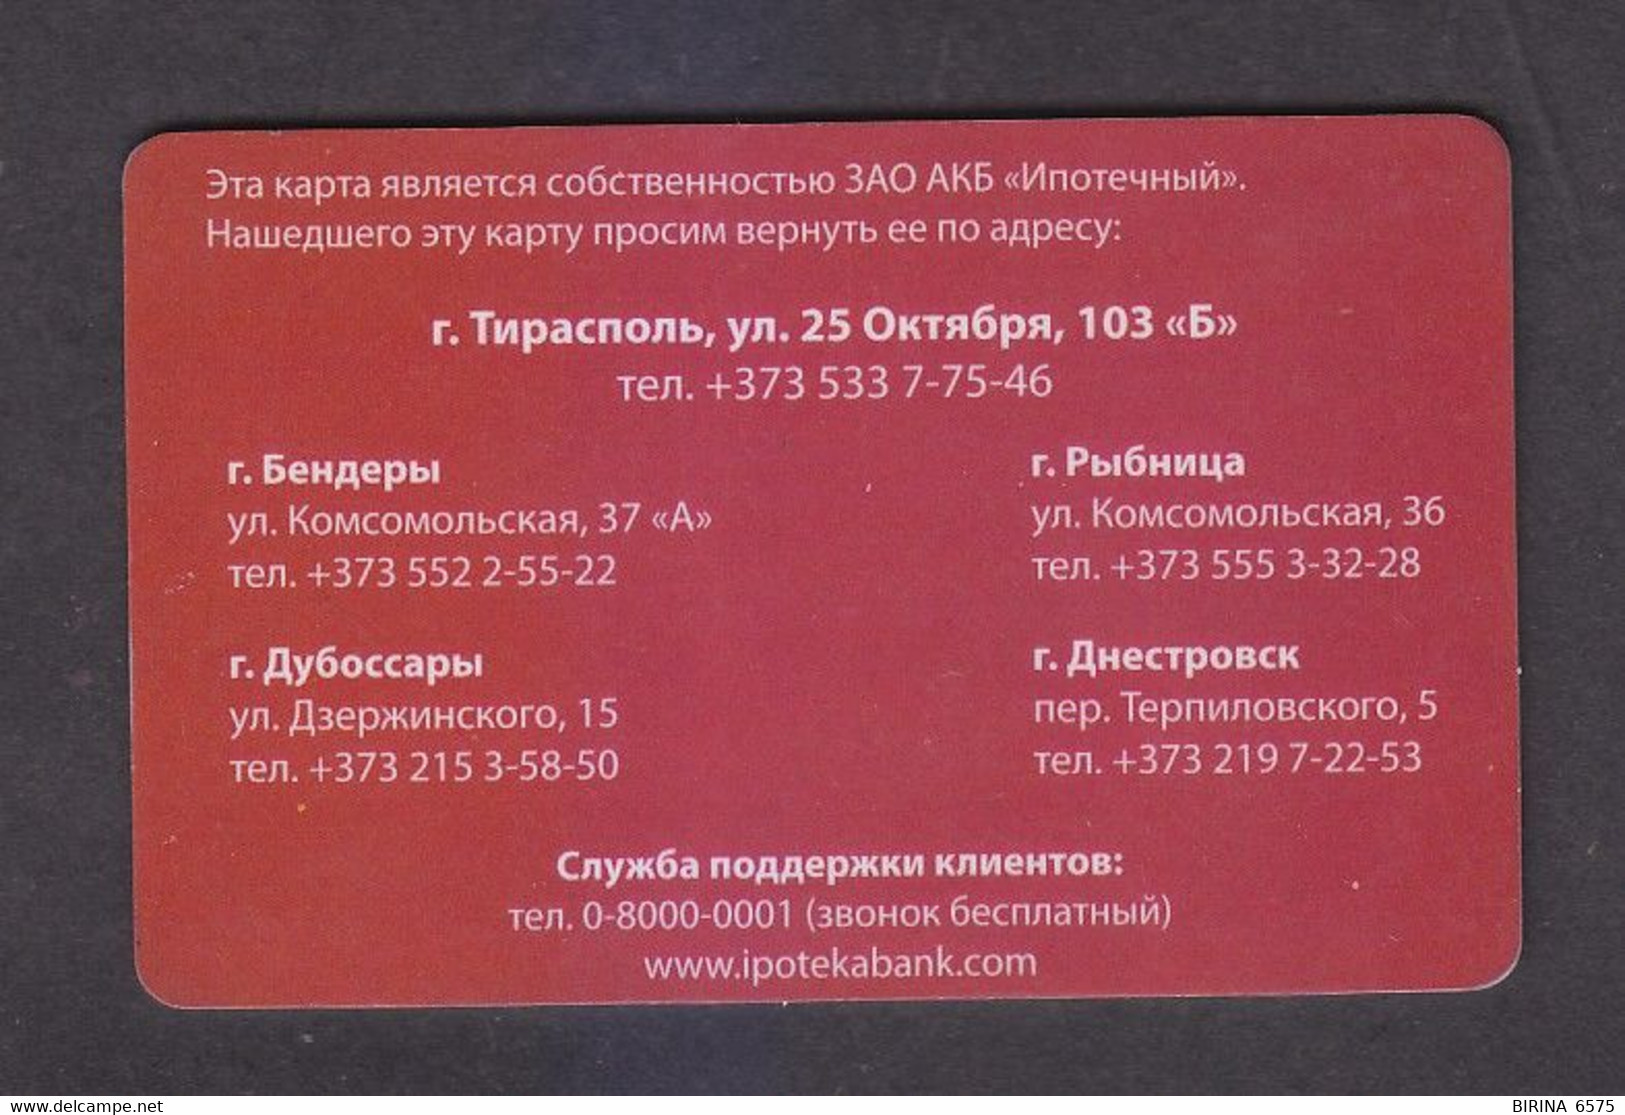 BANK CARD. IPOTECHNYIY BANK. MOLDOVA. TRANSNISTRIA. 2015. - 1-2 - Moldavië